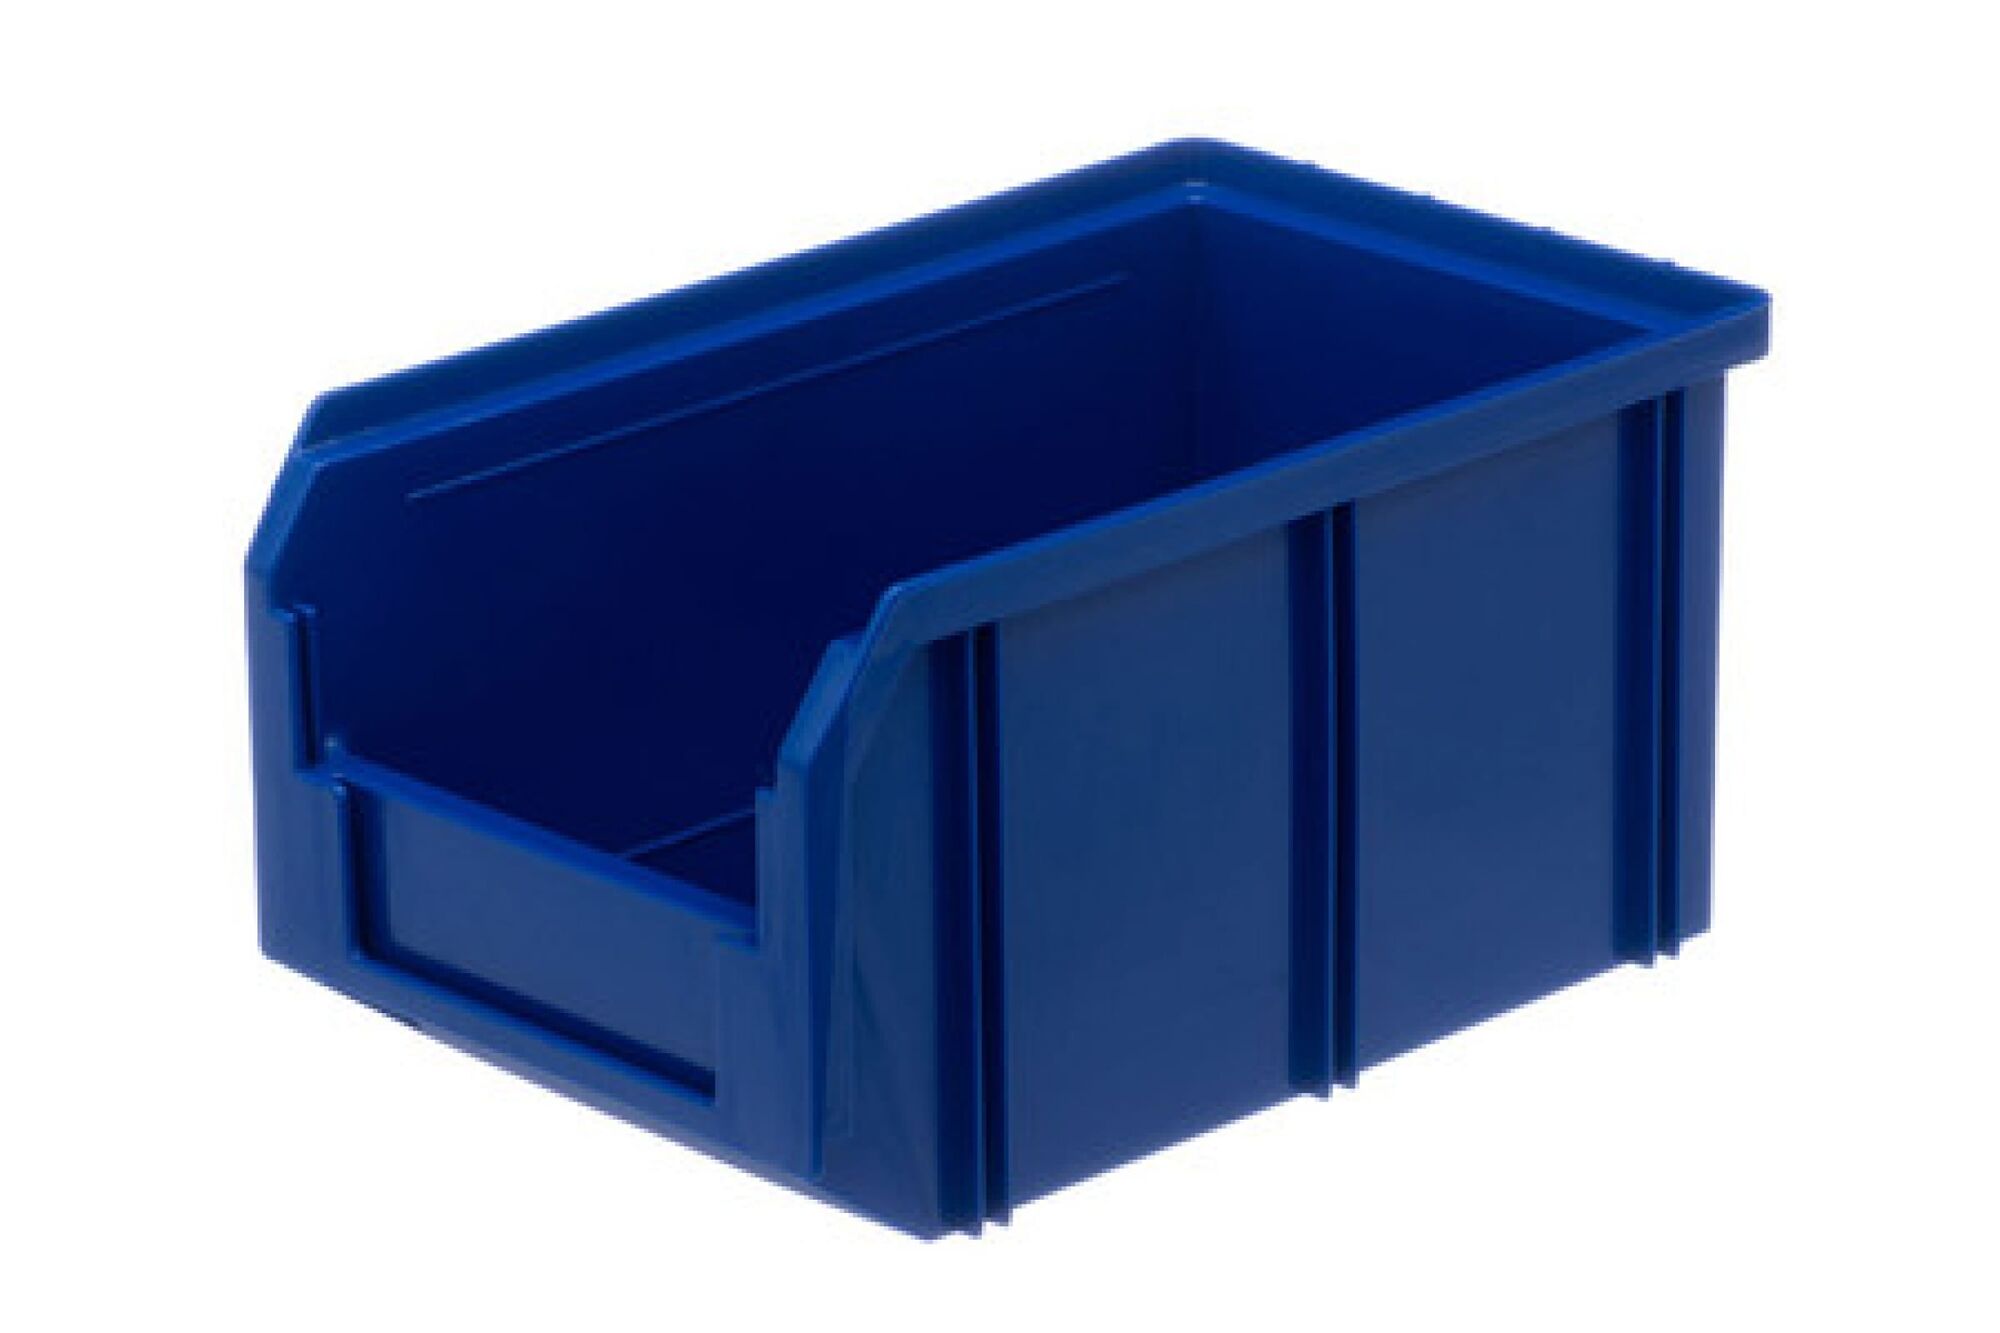 Лоток Стелла V-2 3,8 литр, синий Пластиковый 4623721402500